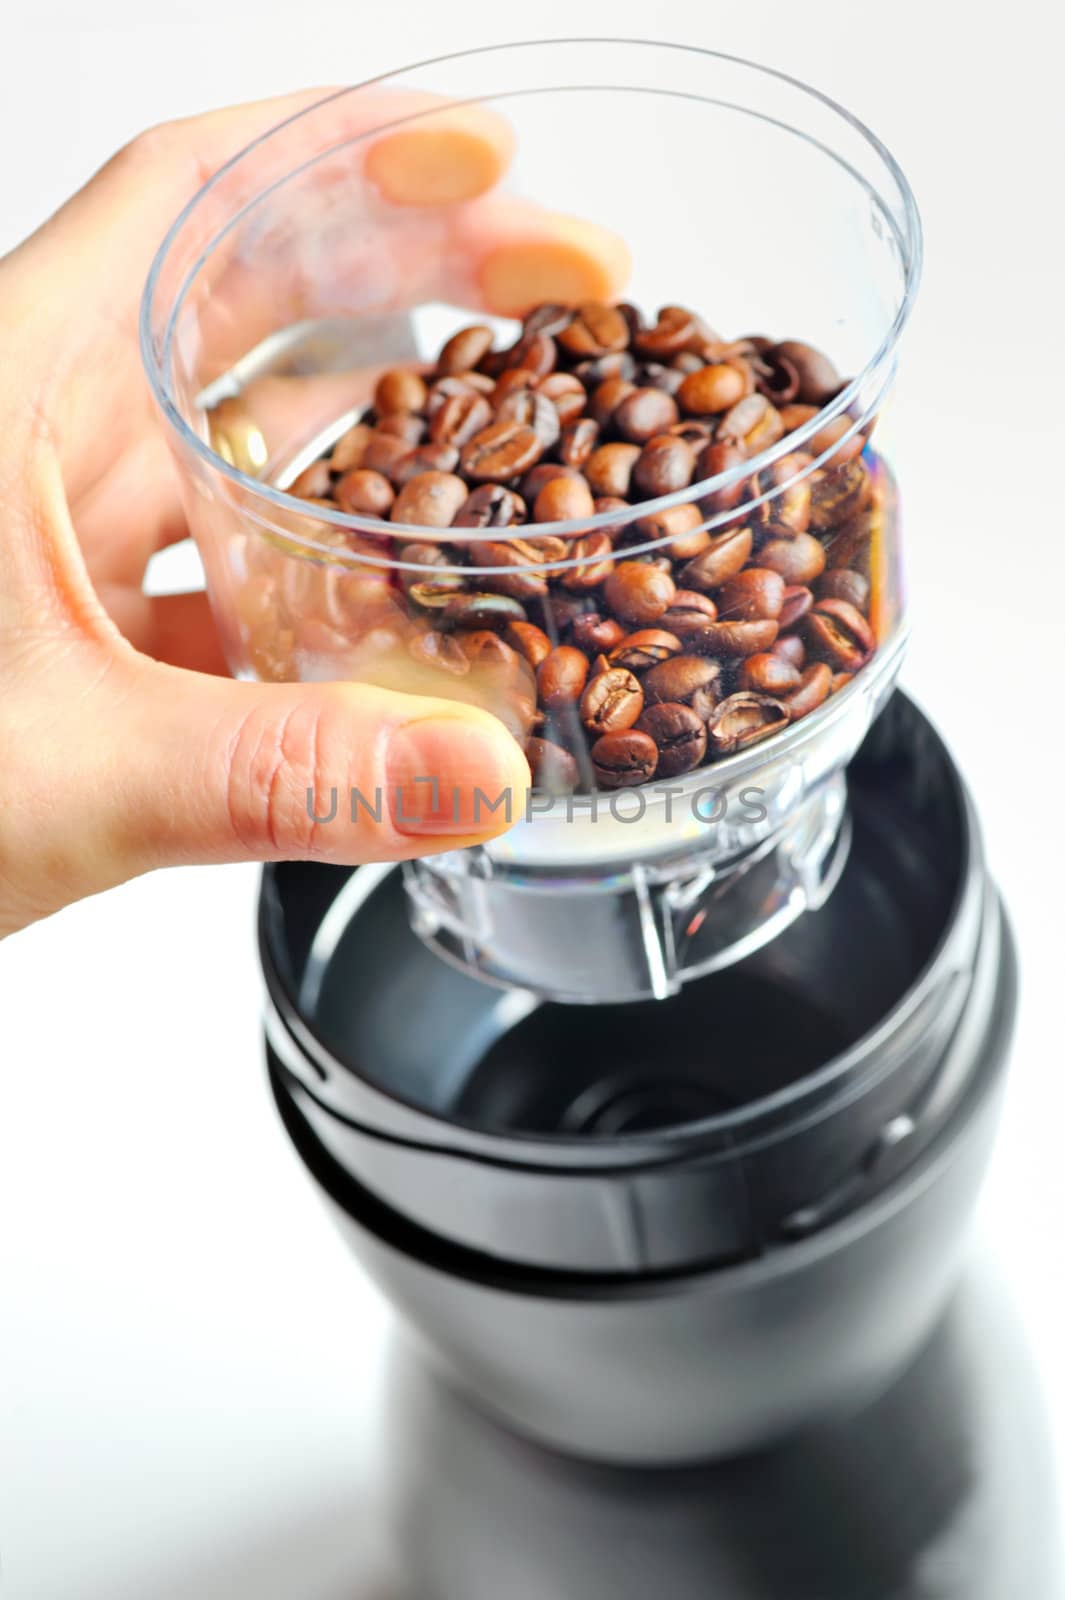 electric coffee grinder by jordachelr